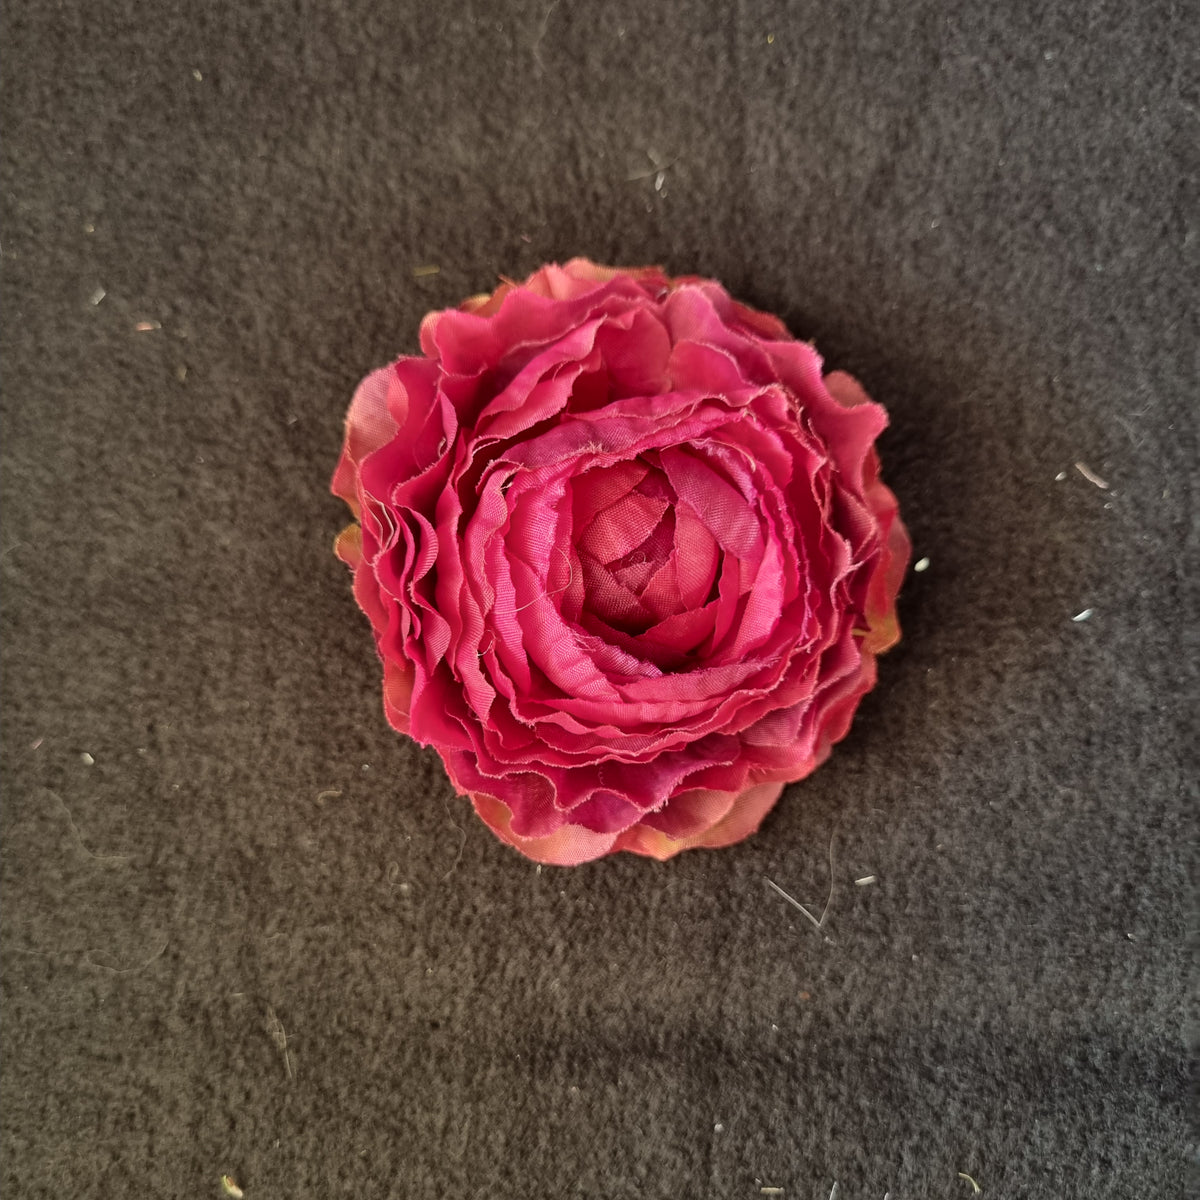 Smuk pæon i mørk rosa - Hårpynt med blomster og perler til bryllup, konfirmation og fest